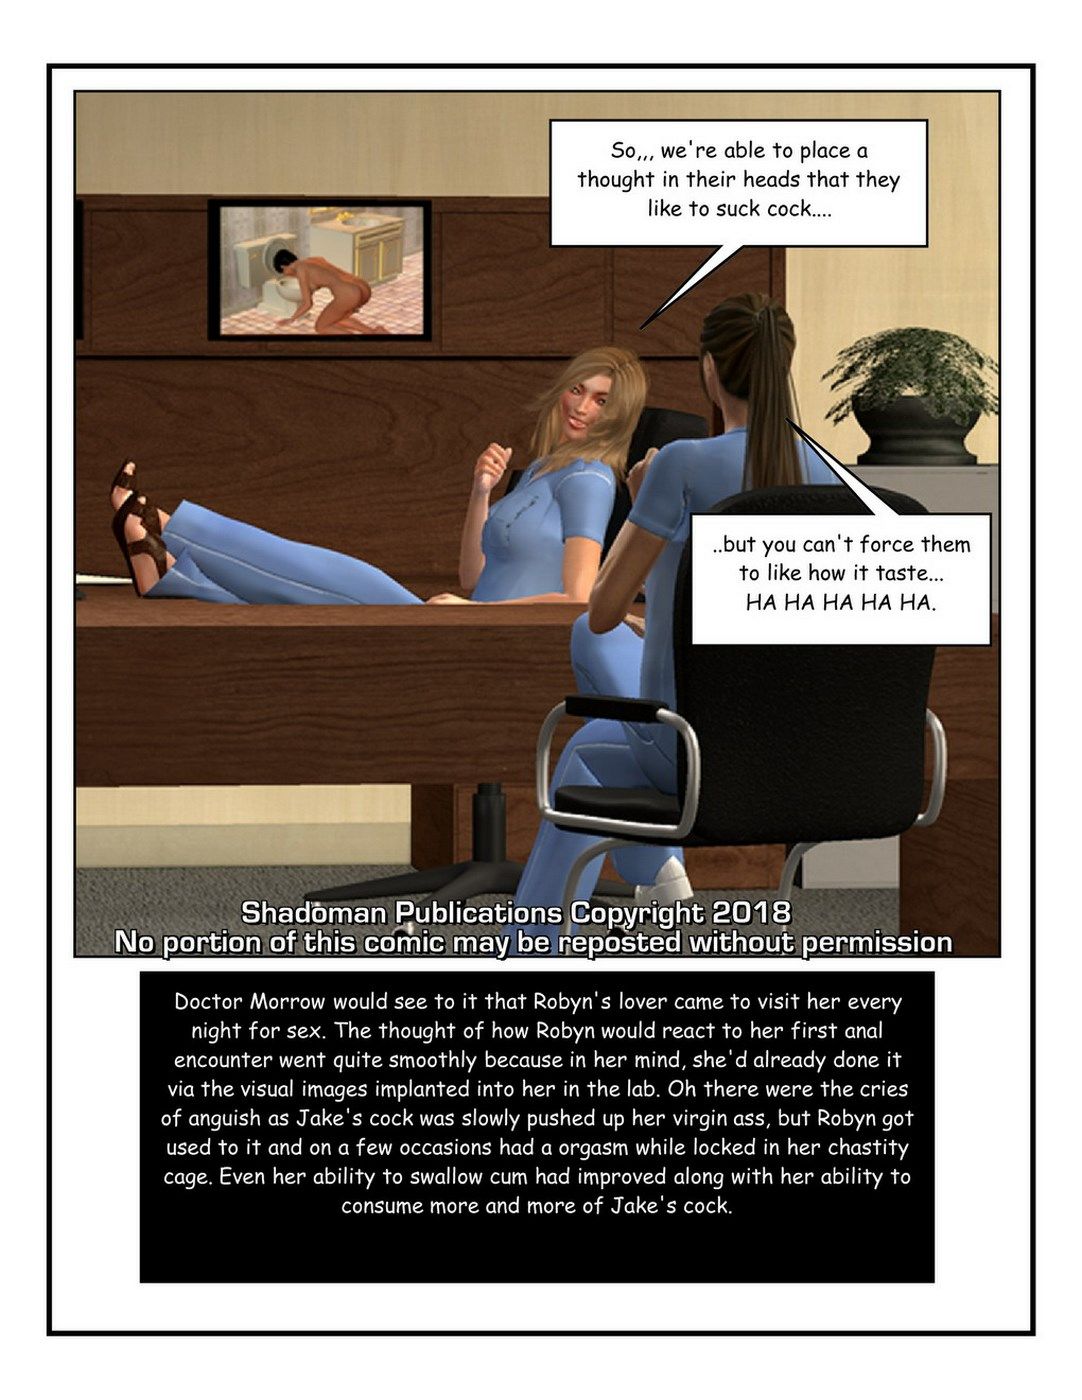 Clinical Trials - Shadoman page 104